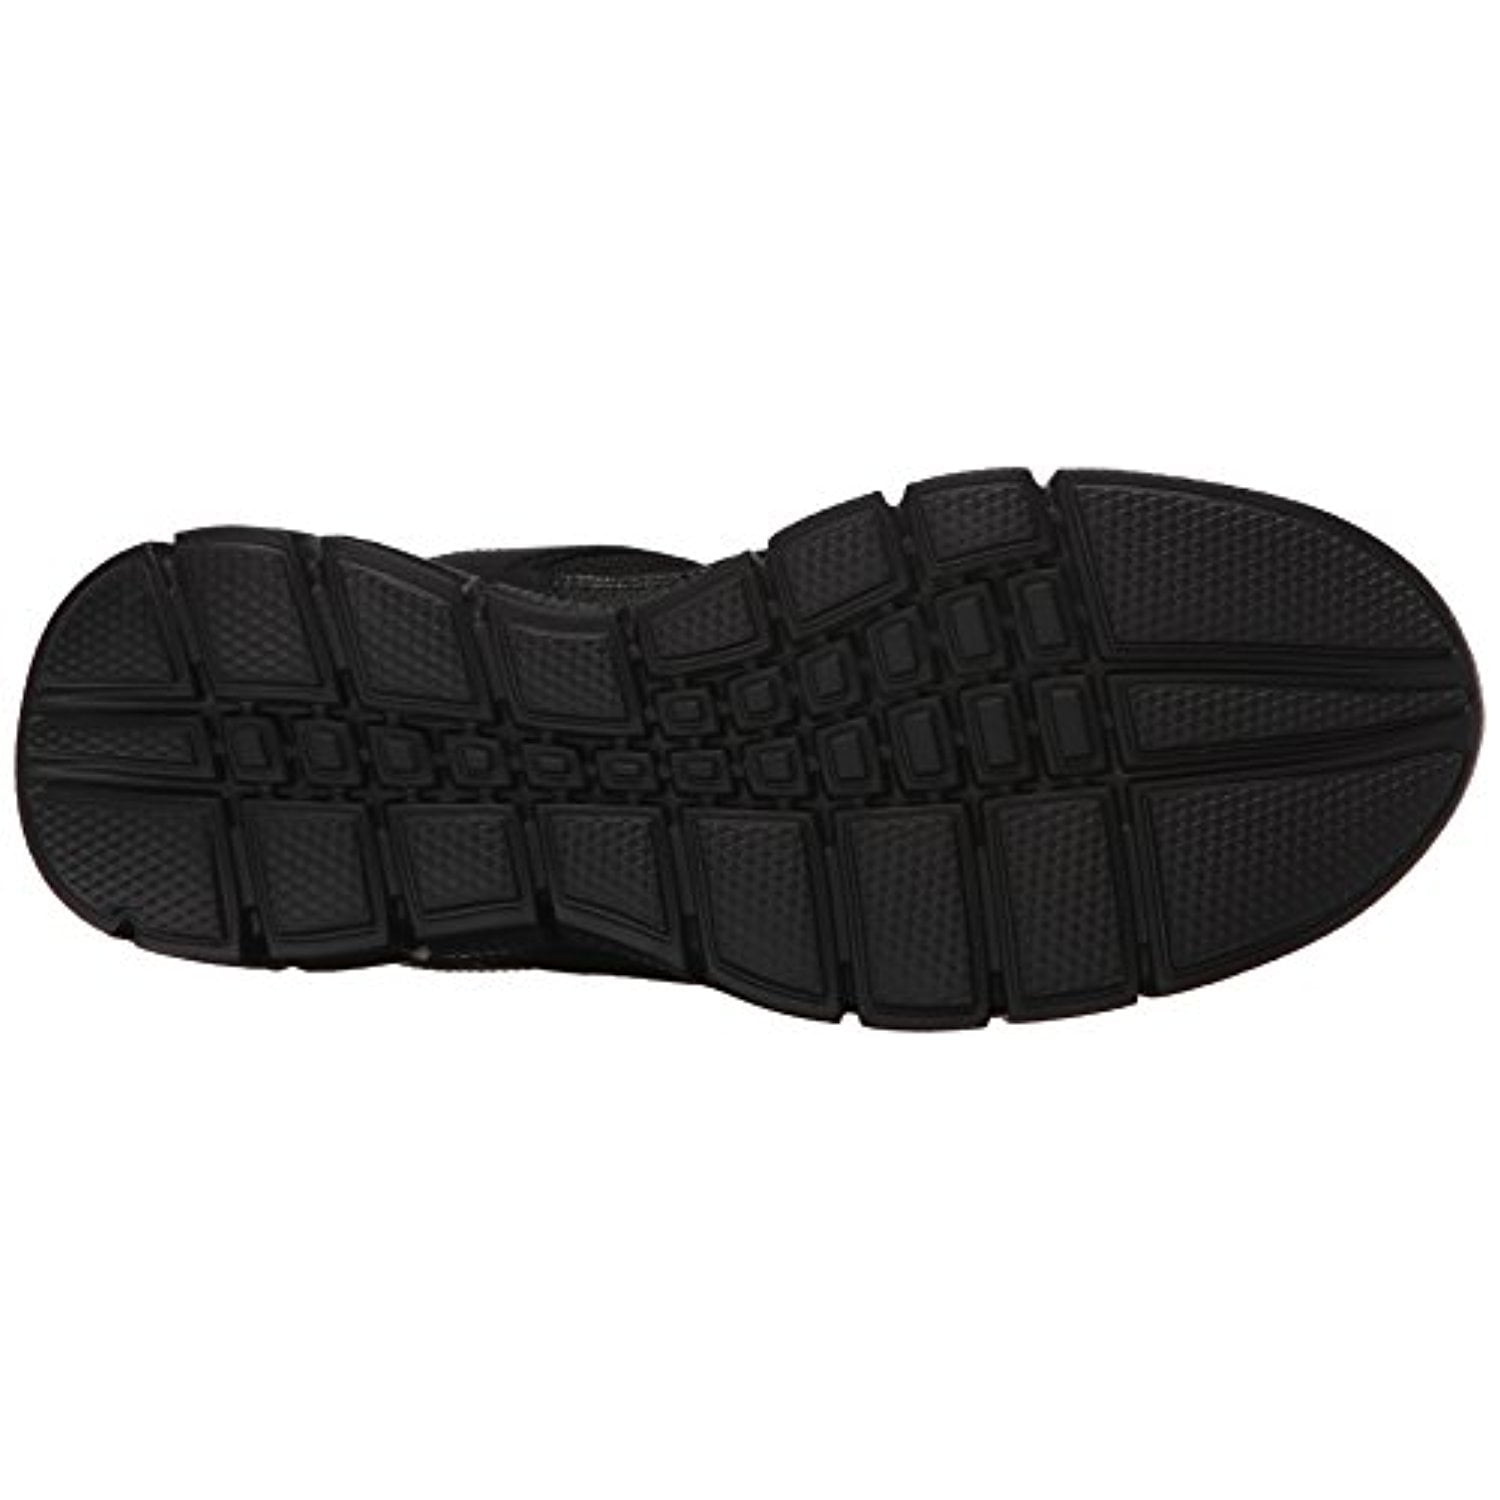 51532 BKW Black White Skechers Shoes 